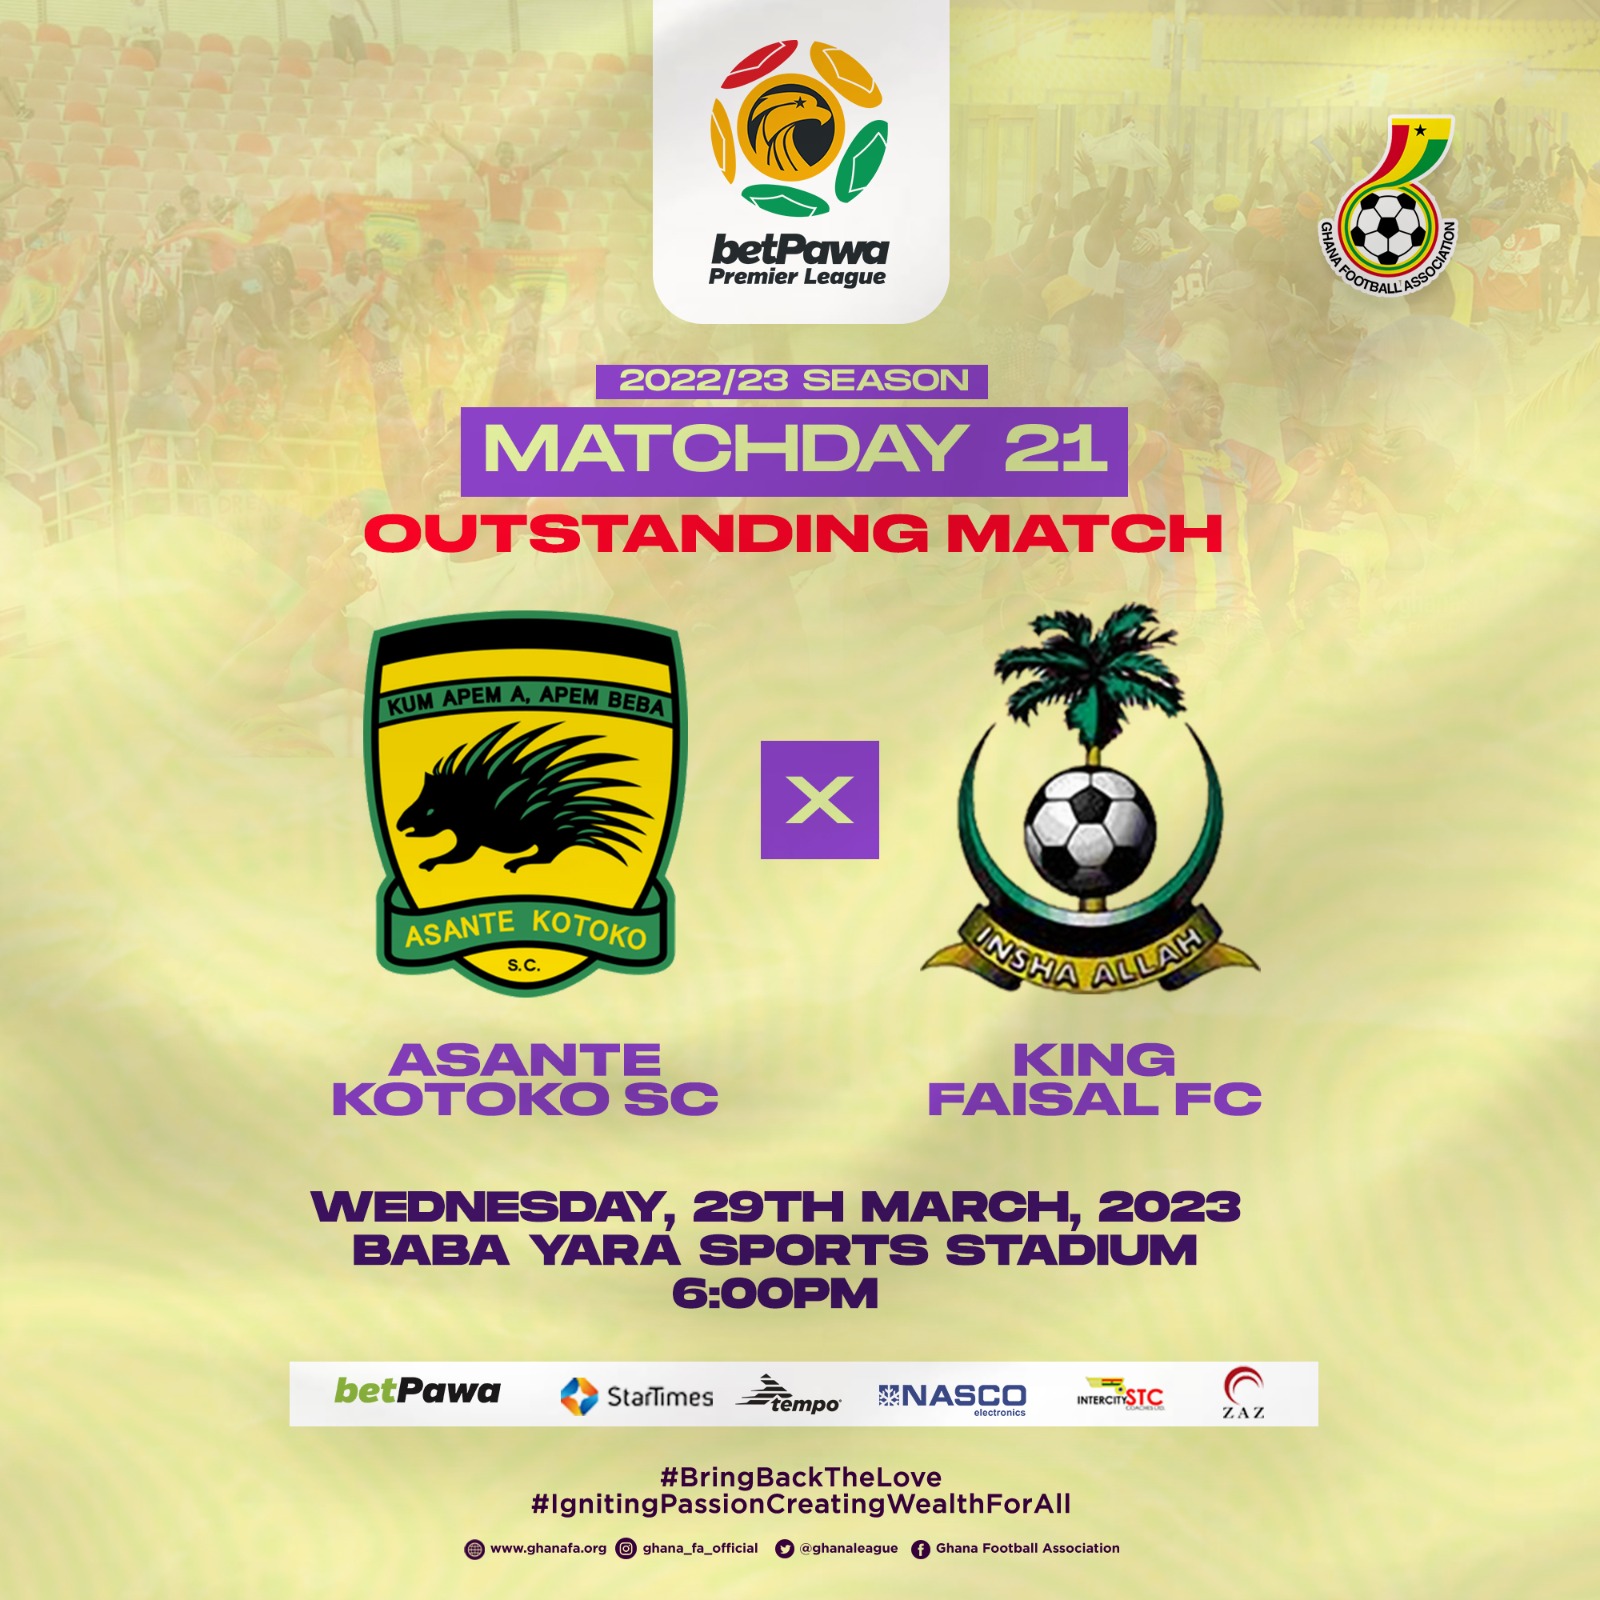 Asante Kotoko Vs. King Faisal League match postponed